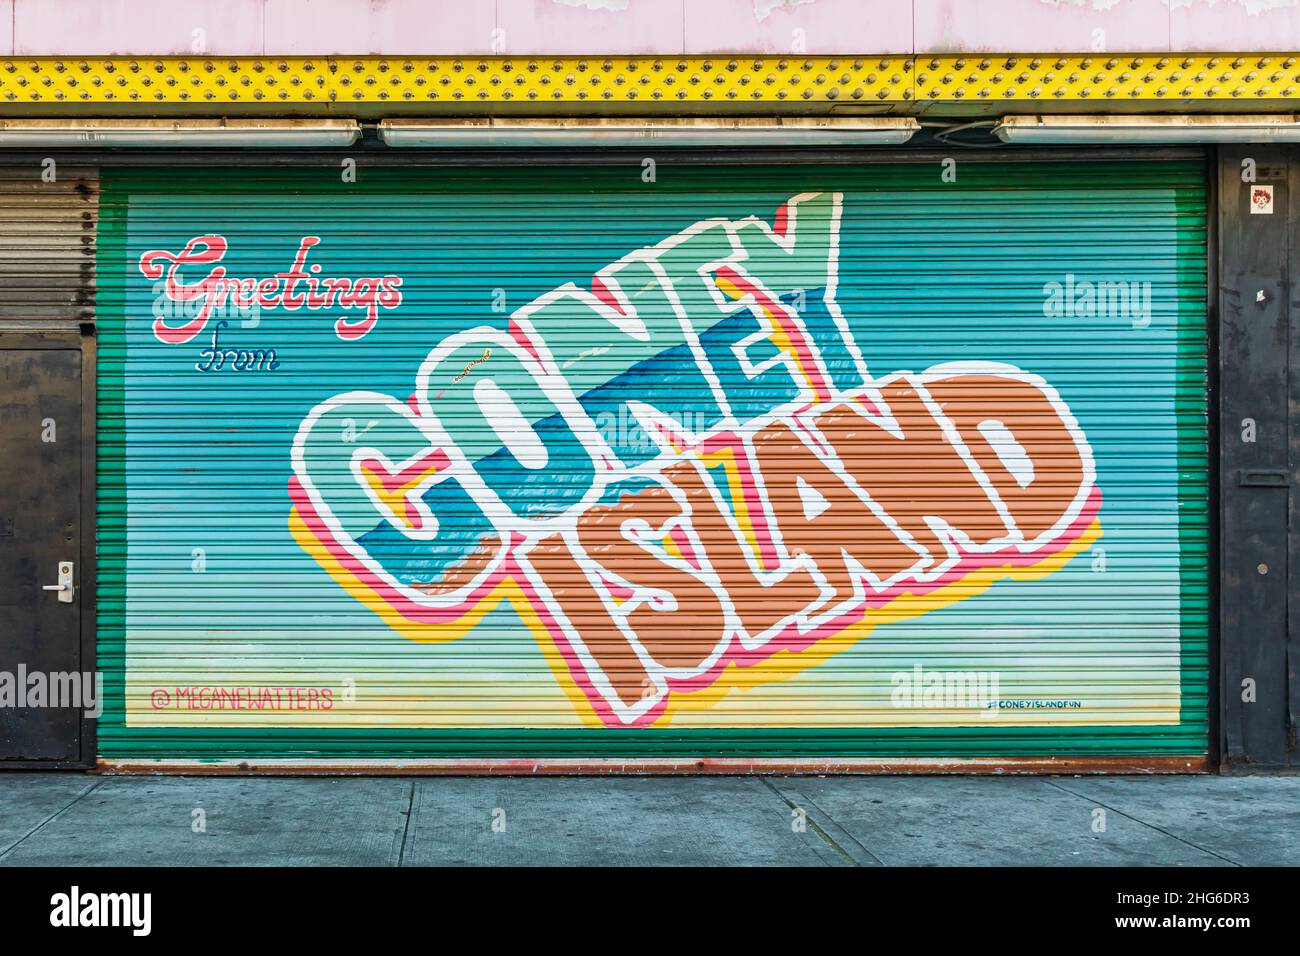 Coney Island, Brooklyn, New York City, New York, USA. November 6, 2021. Greetings from Coney Island mural by Megan Watters. Stock Photo